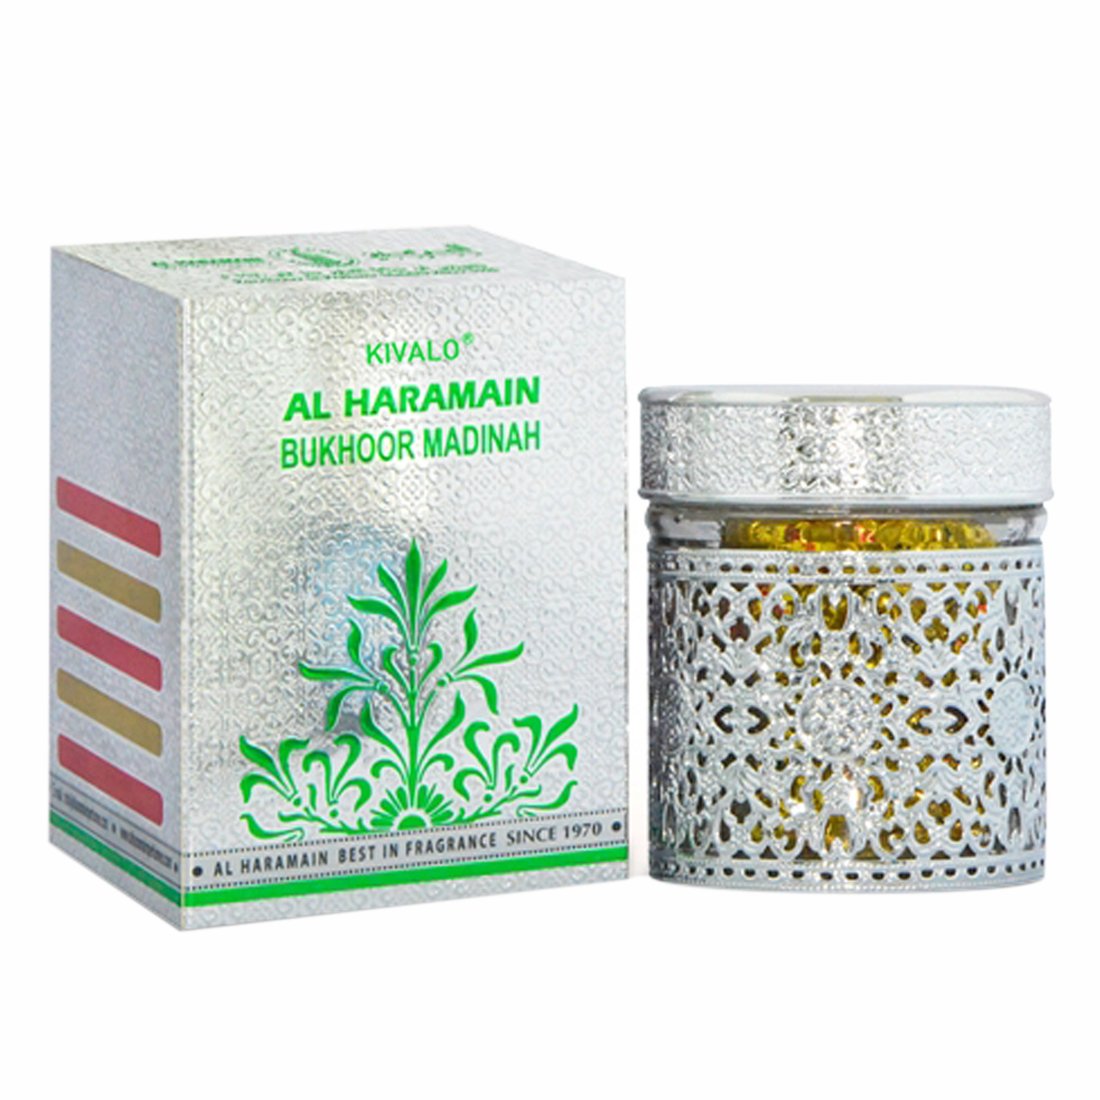 Al Haramain Bukhoor Madinah-Pure Bakhoor Wooden Sticks - 150g